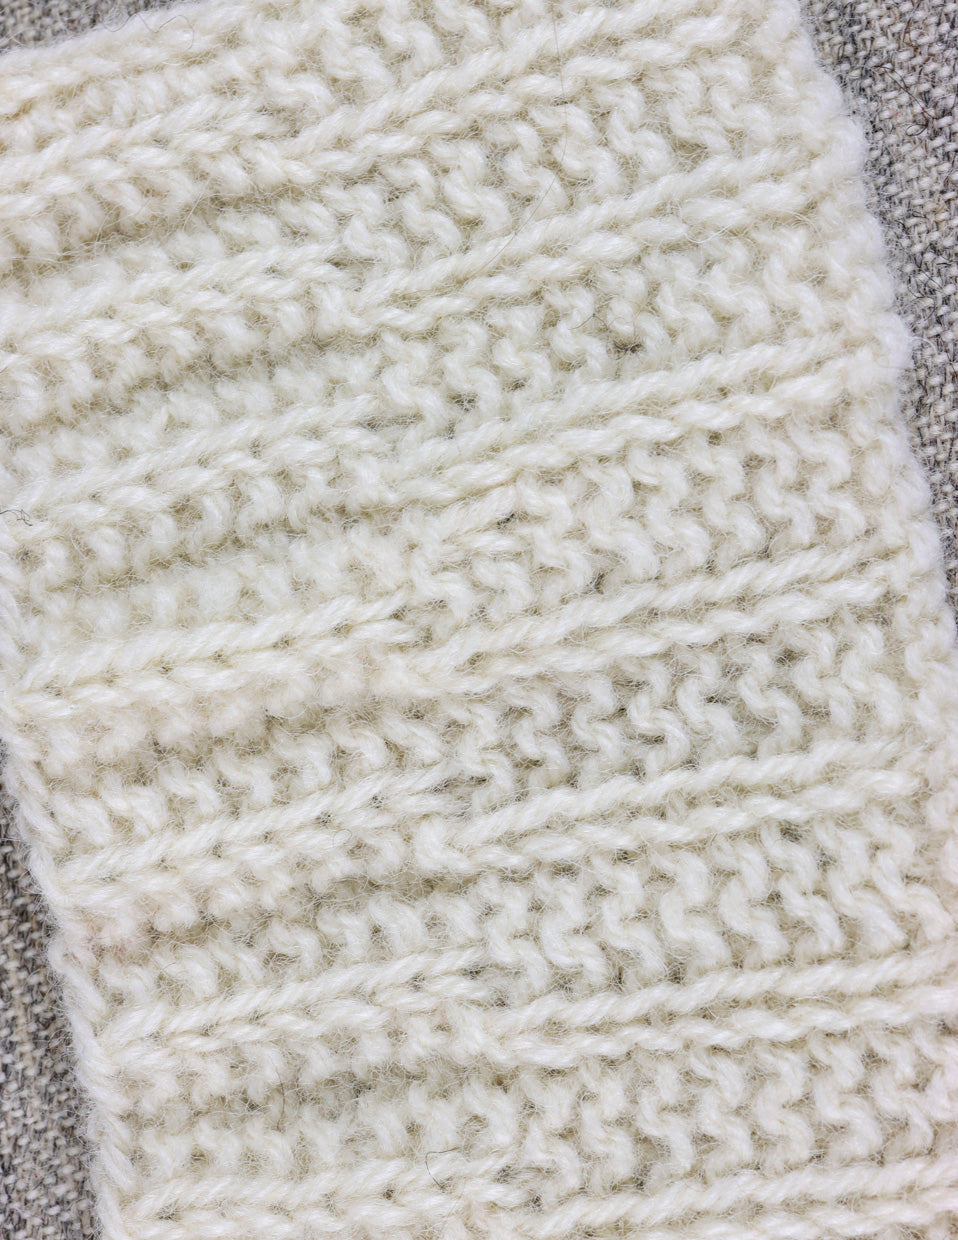 Unspun yarn from Sennesvik